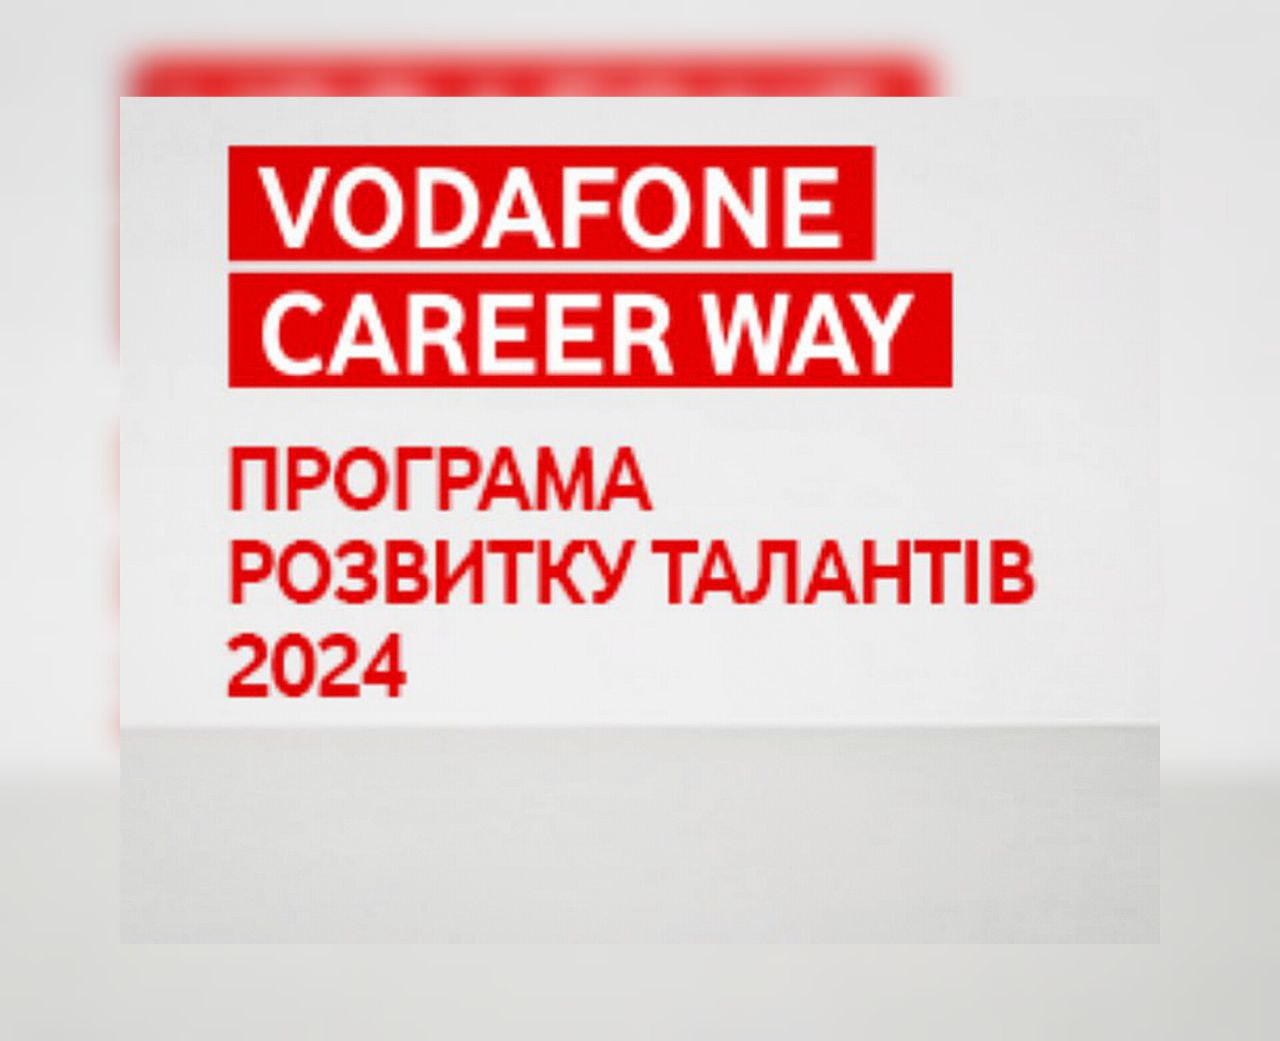 Vodafone Career Way 2024🔥